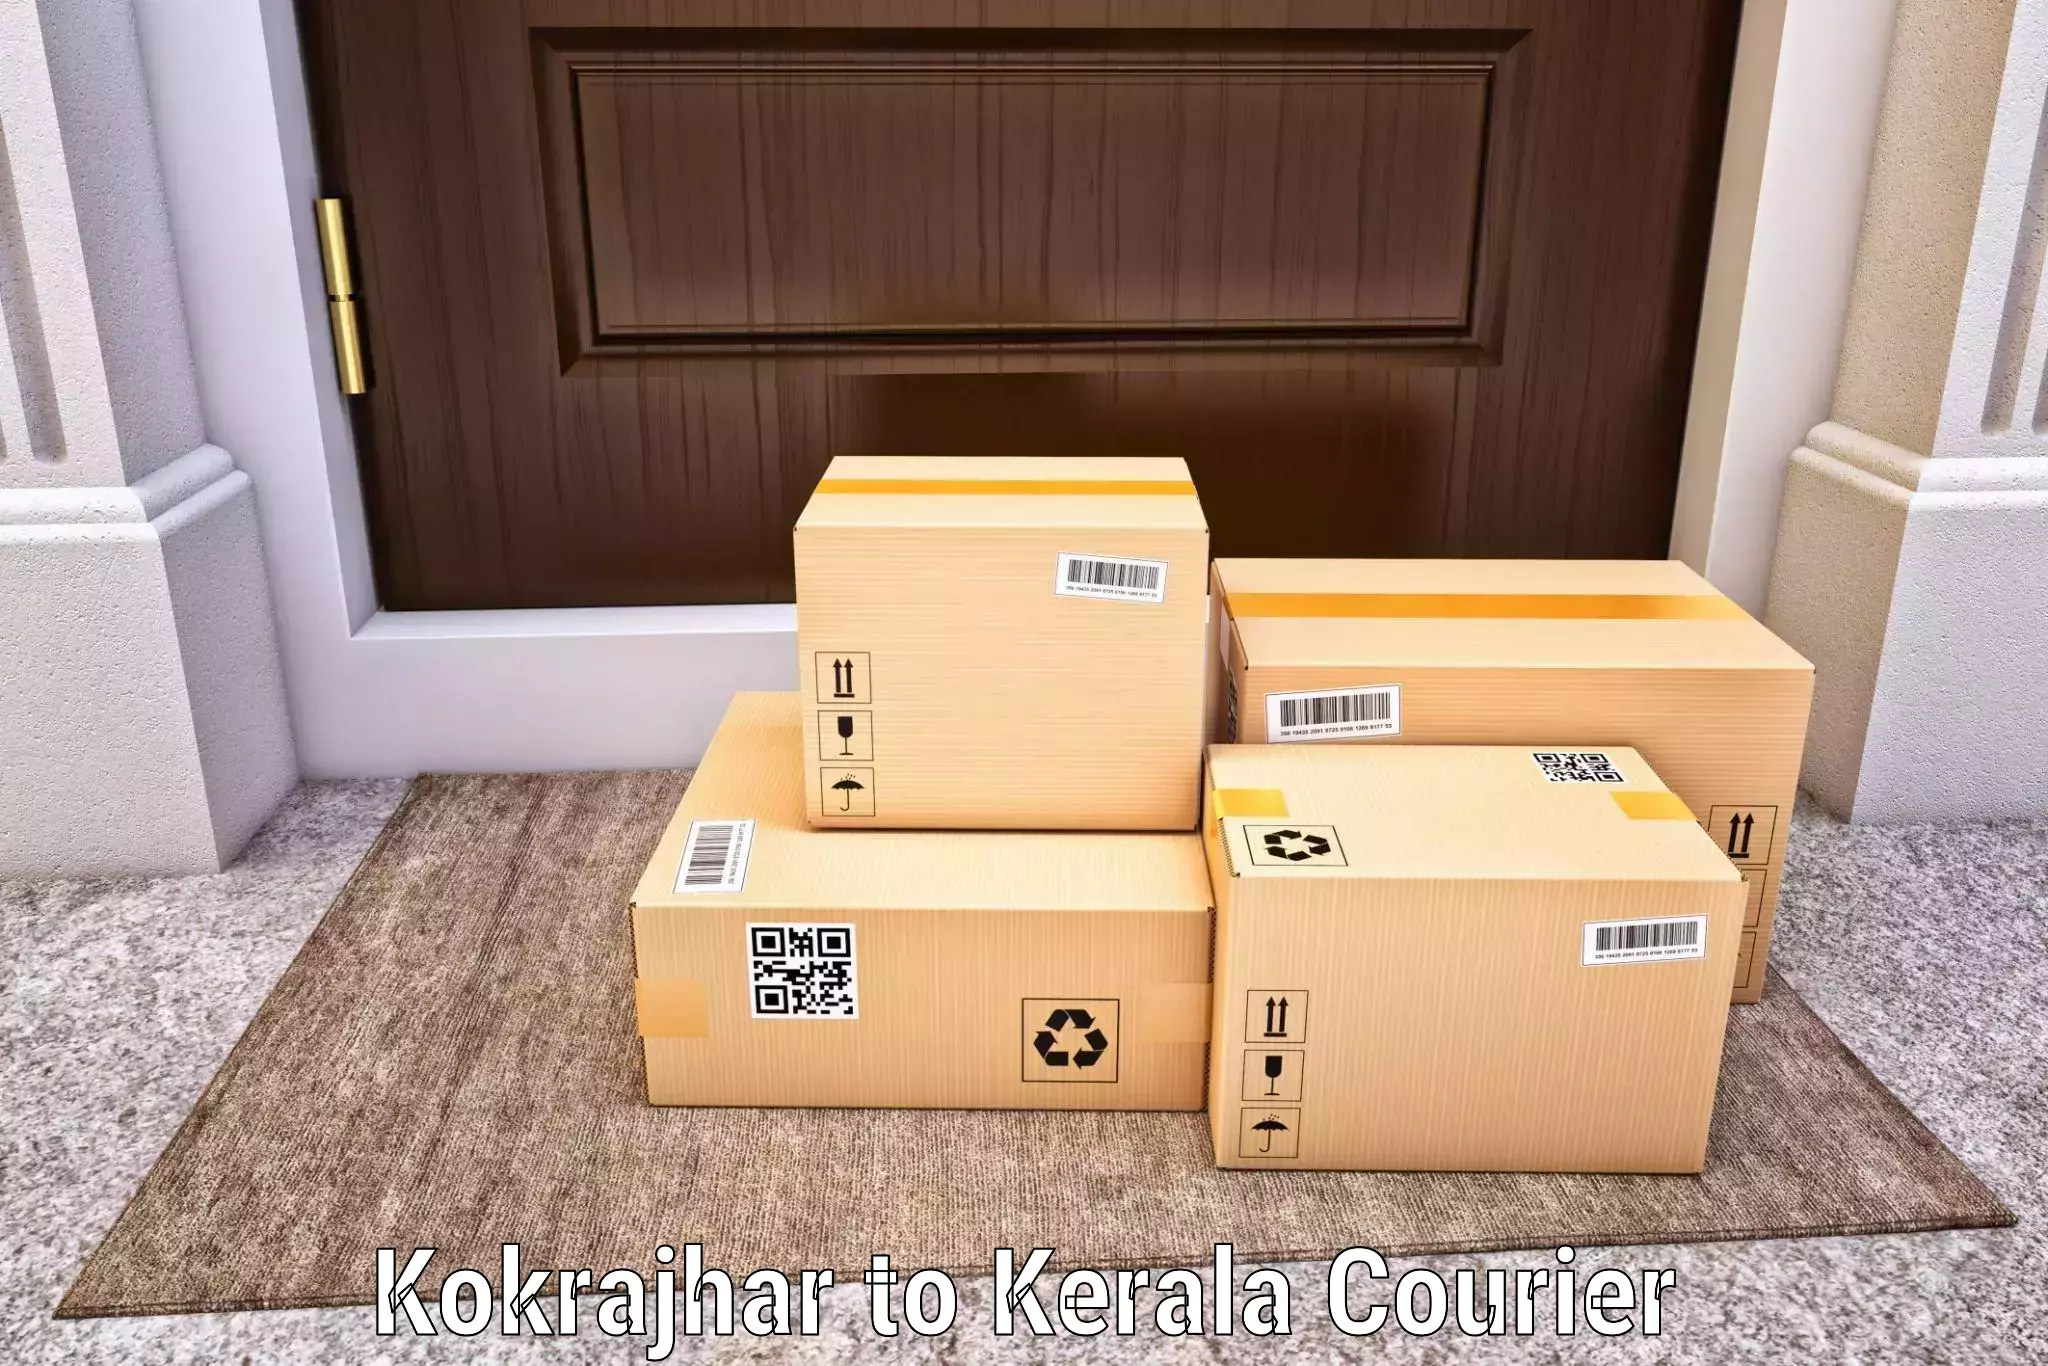 Subscription-based courier Kokrajhar to Cochin Port Kochi